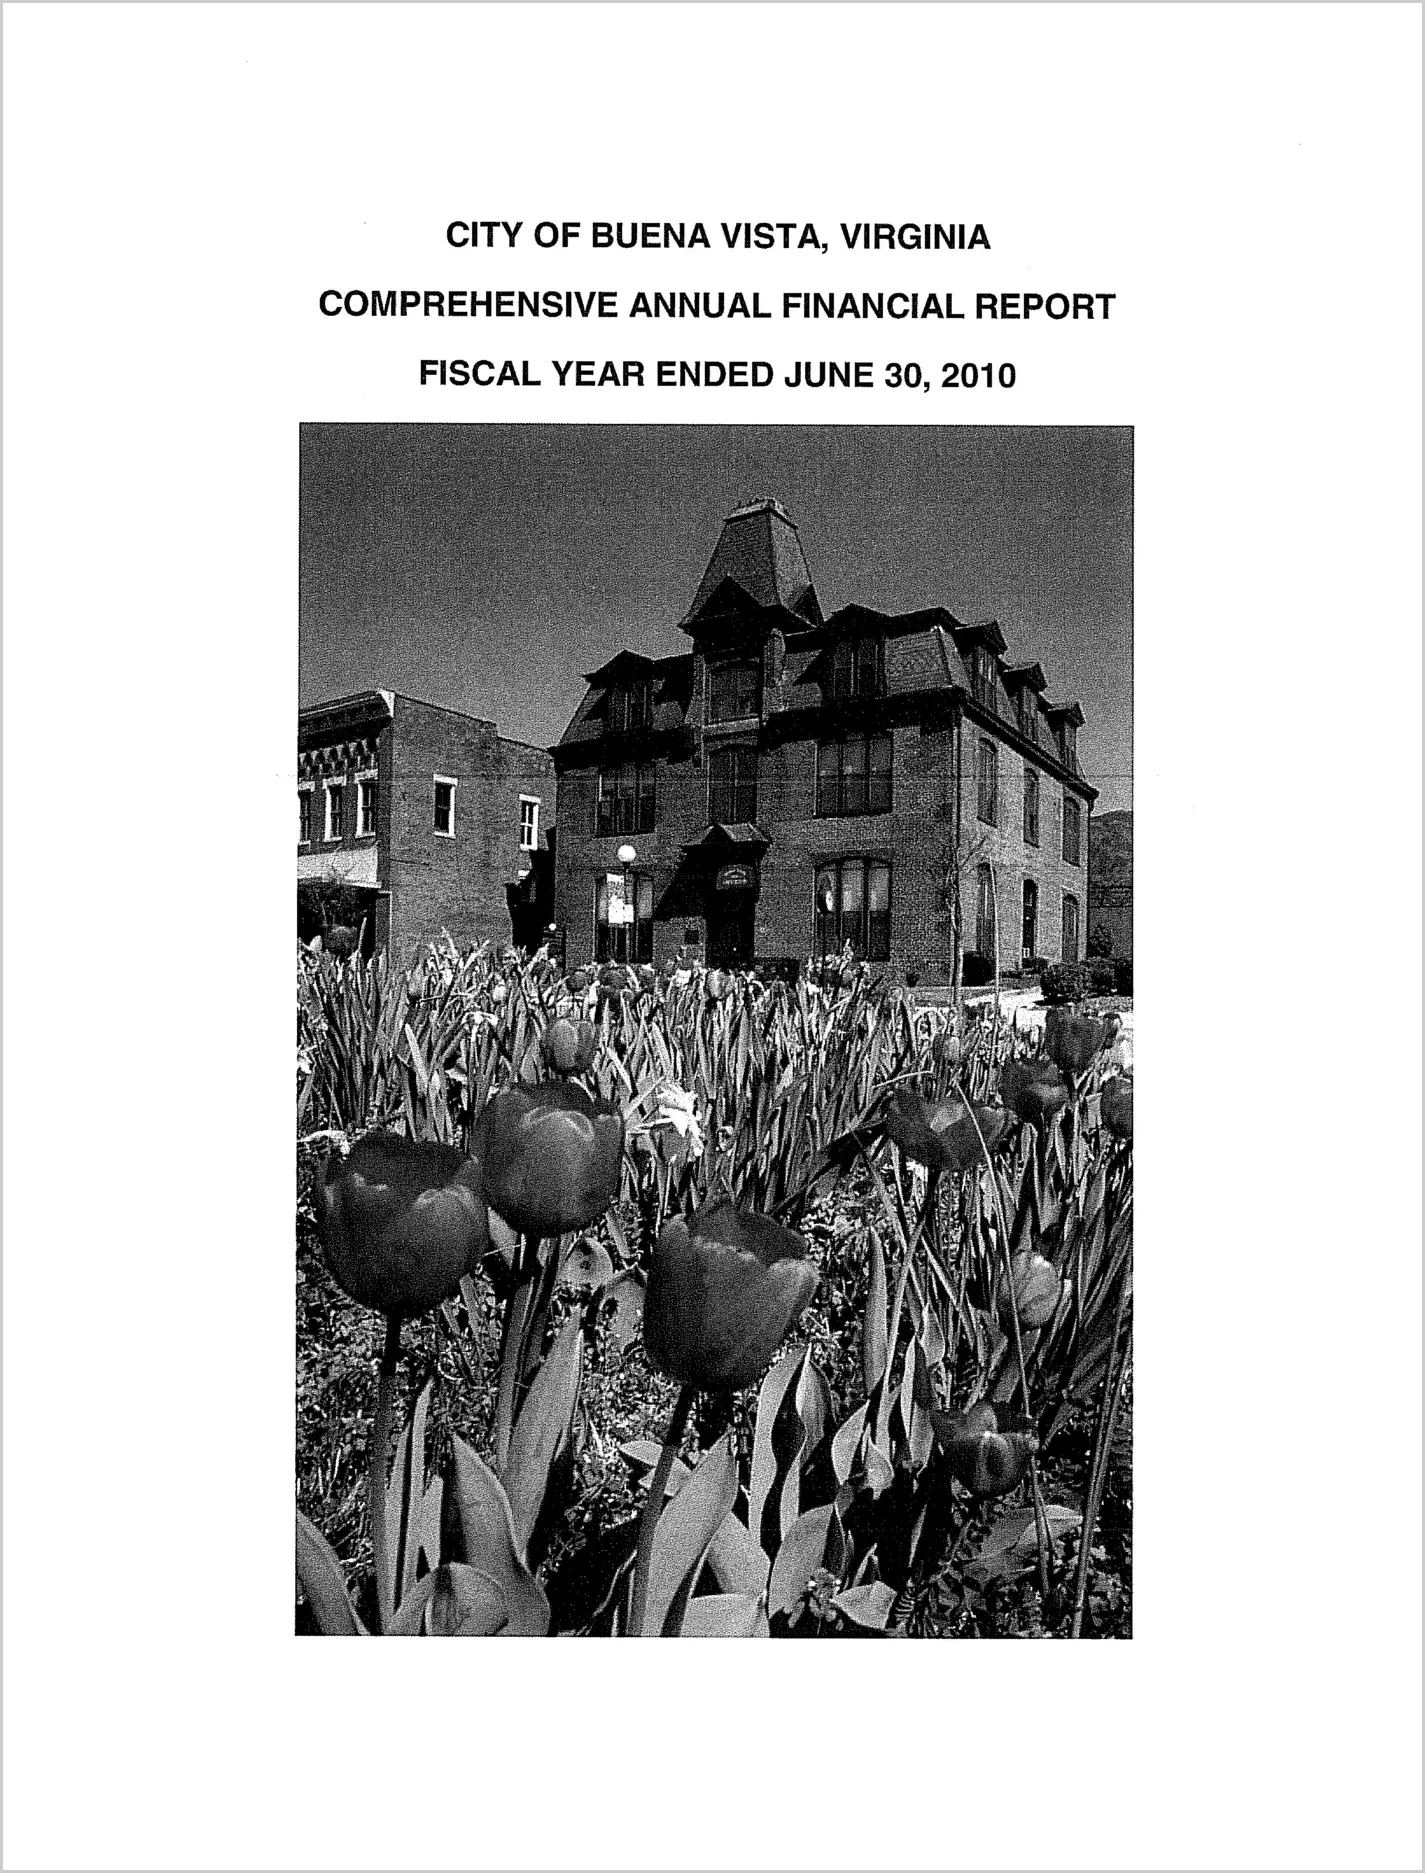 2010 Annual Financial Report for City of Buena Vista